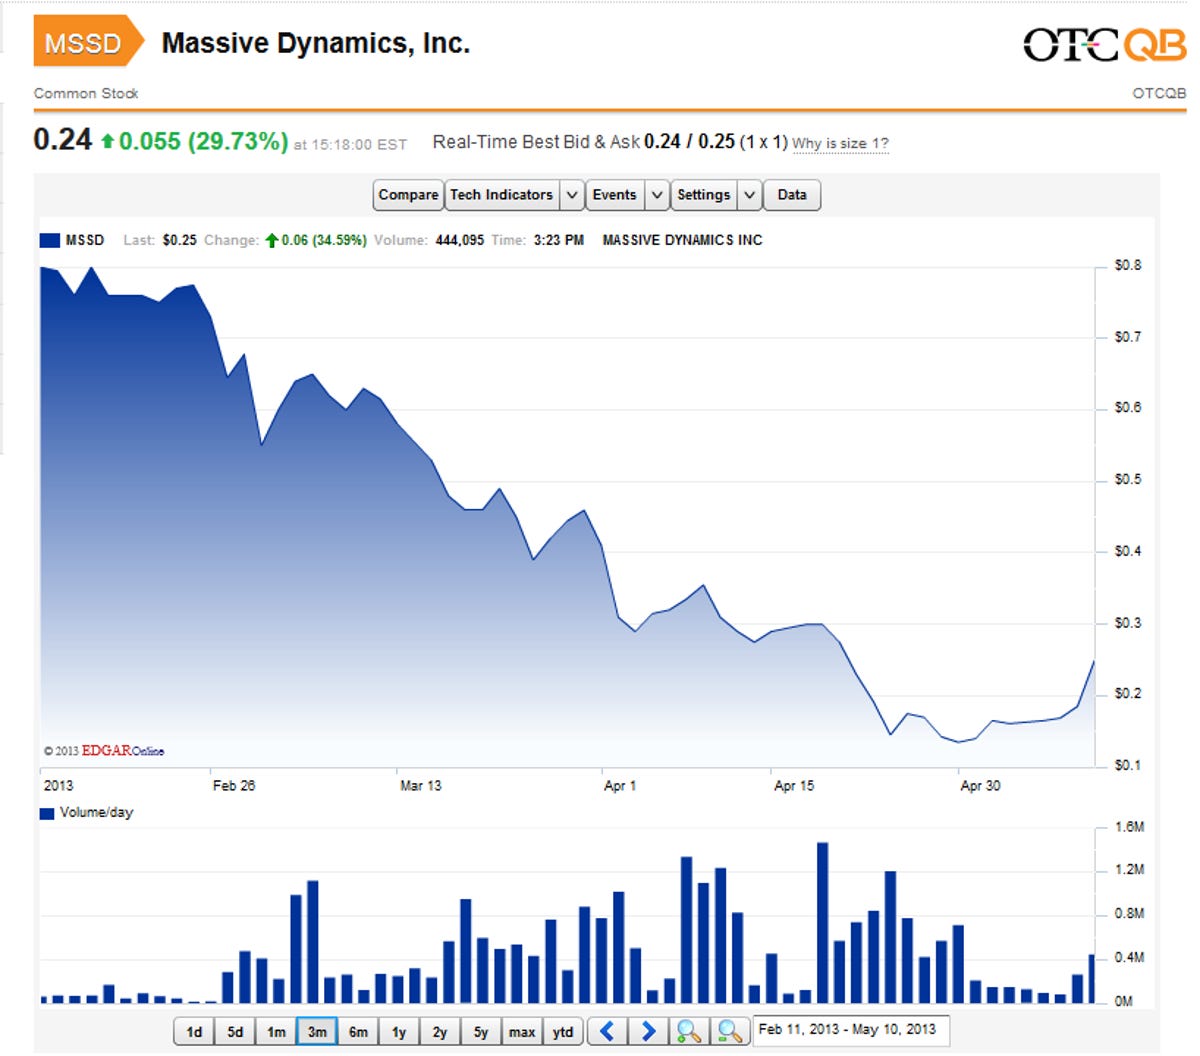 Massive Dynamics' 2013 stock performance.